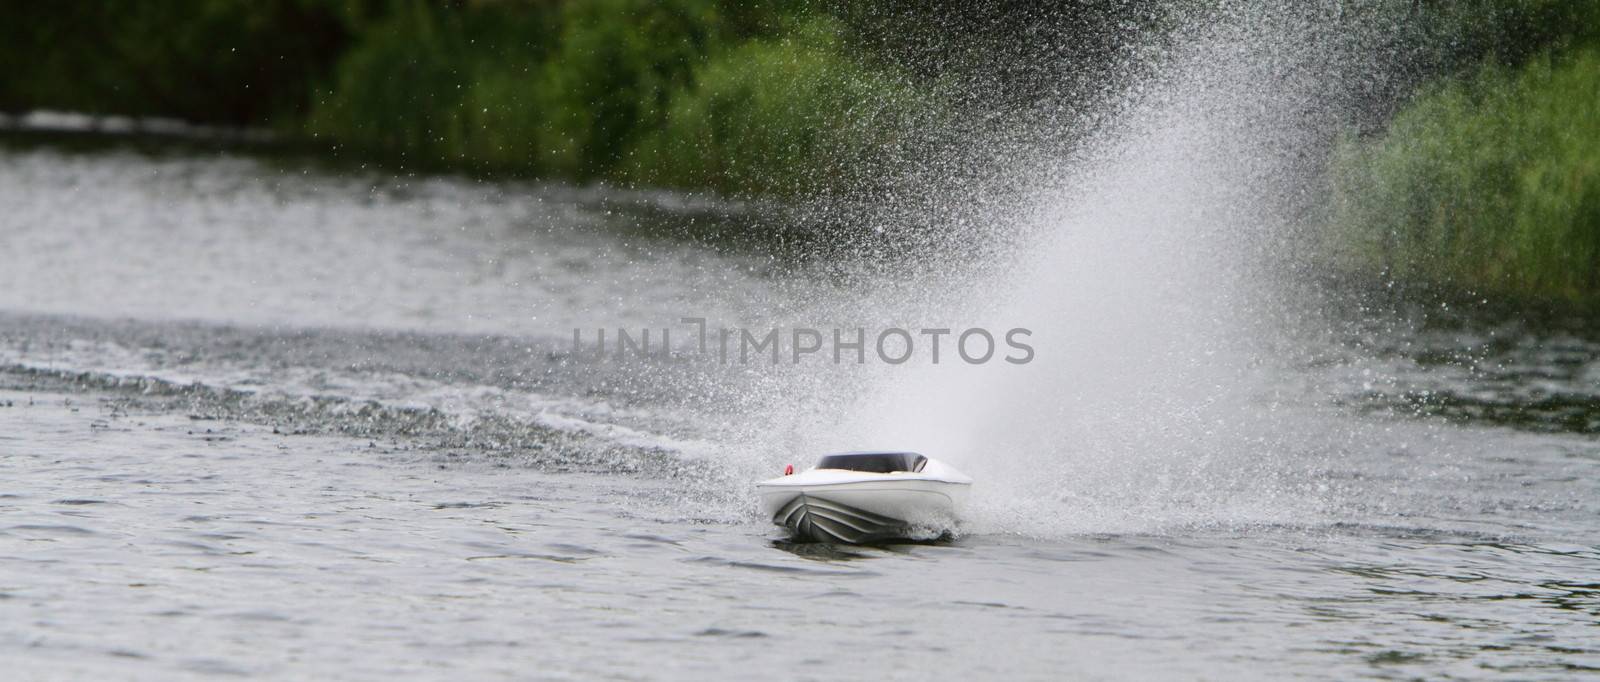 model speedboat on water by mitzy